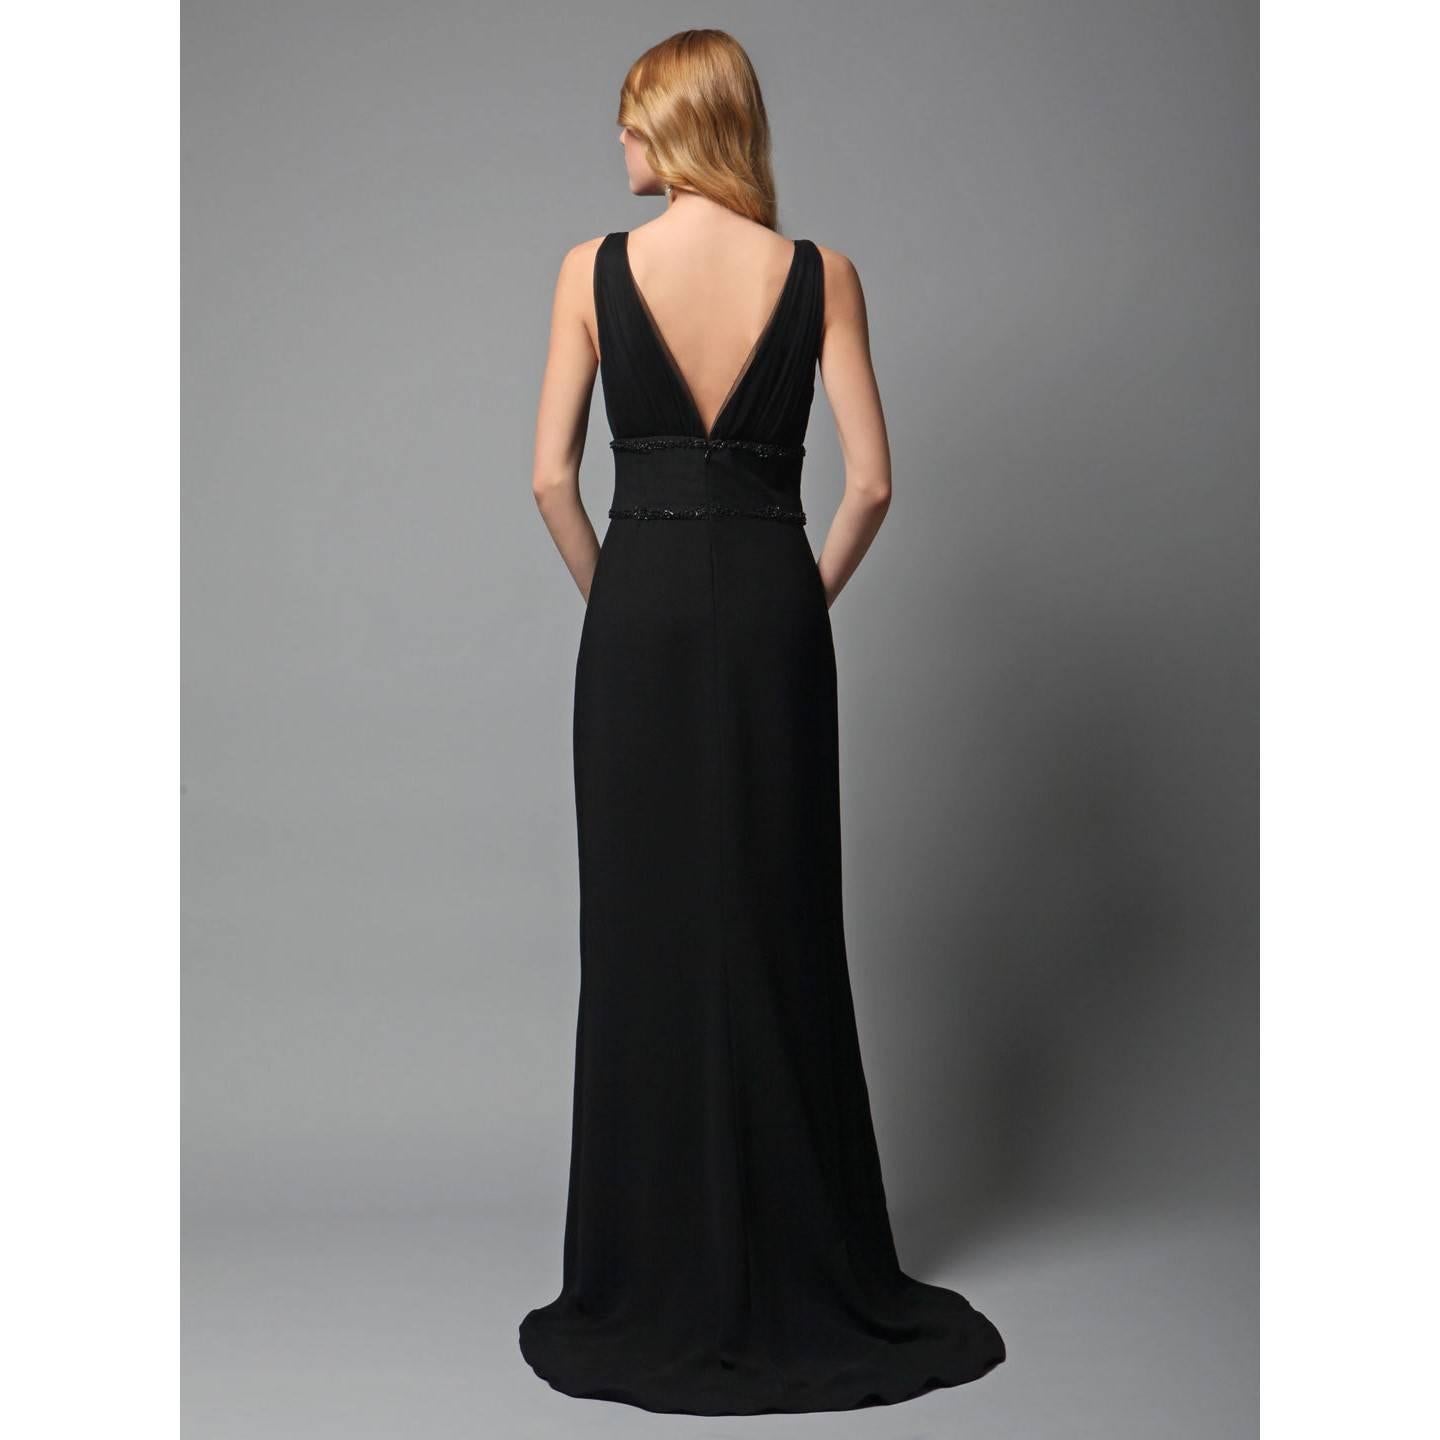 New Badgley Mischka Couture Beaded Evening Dress Gown Sz 6 1